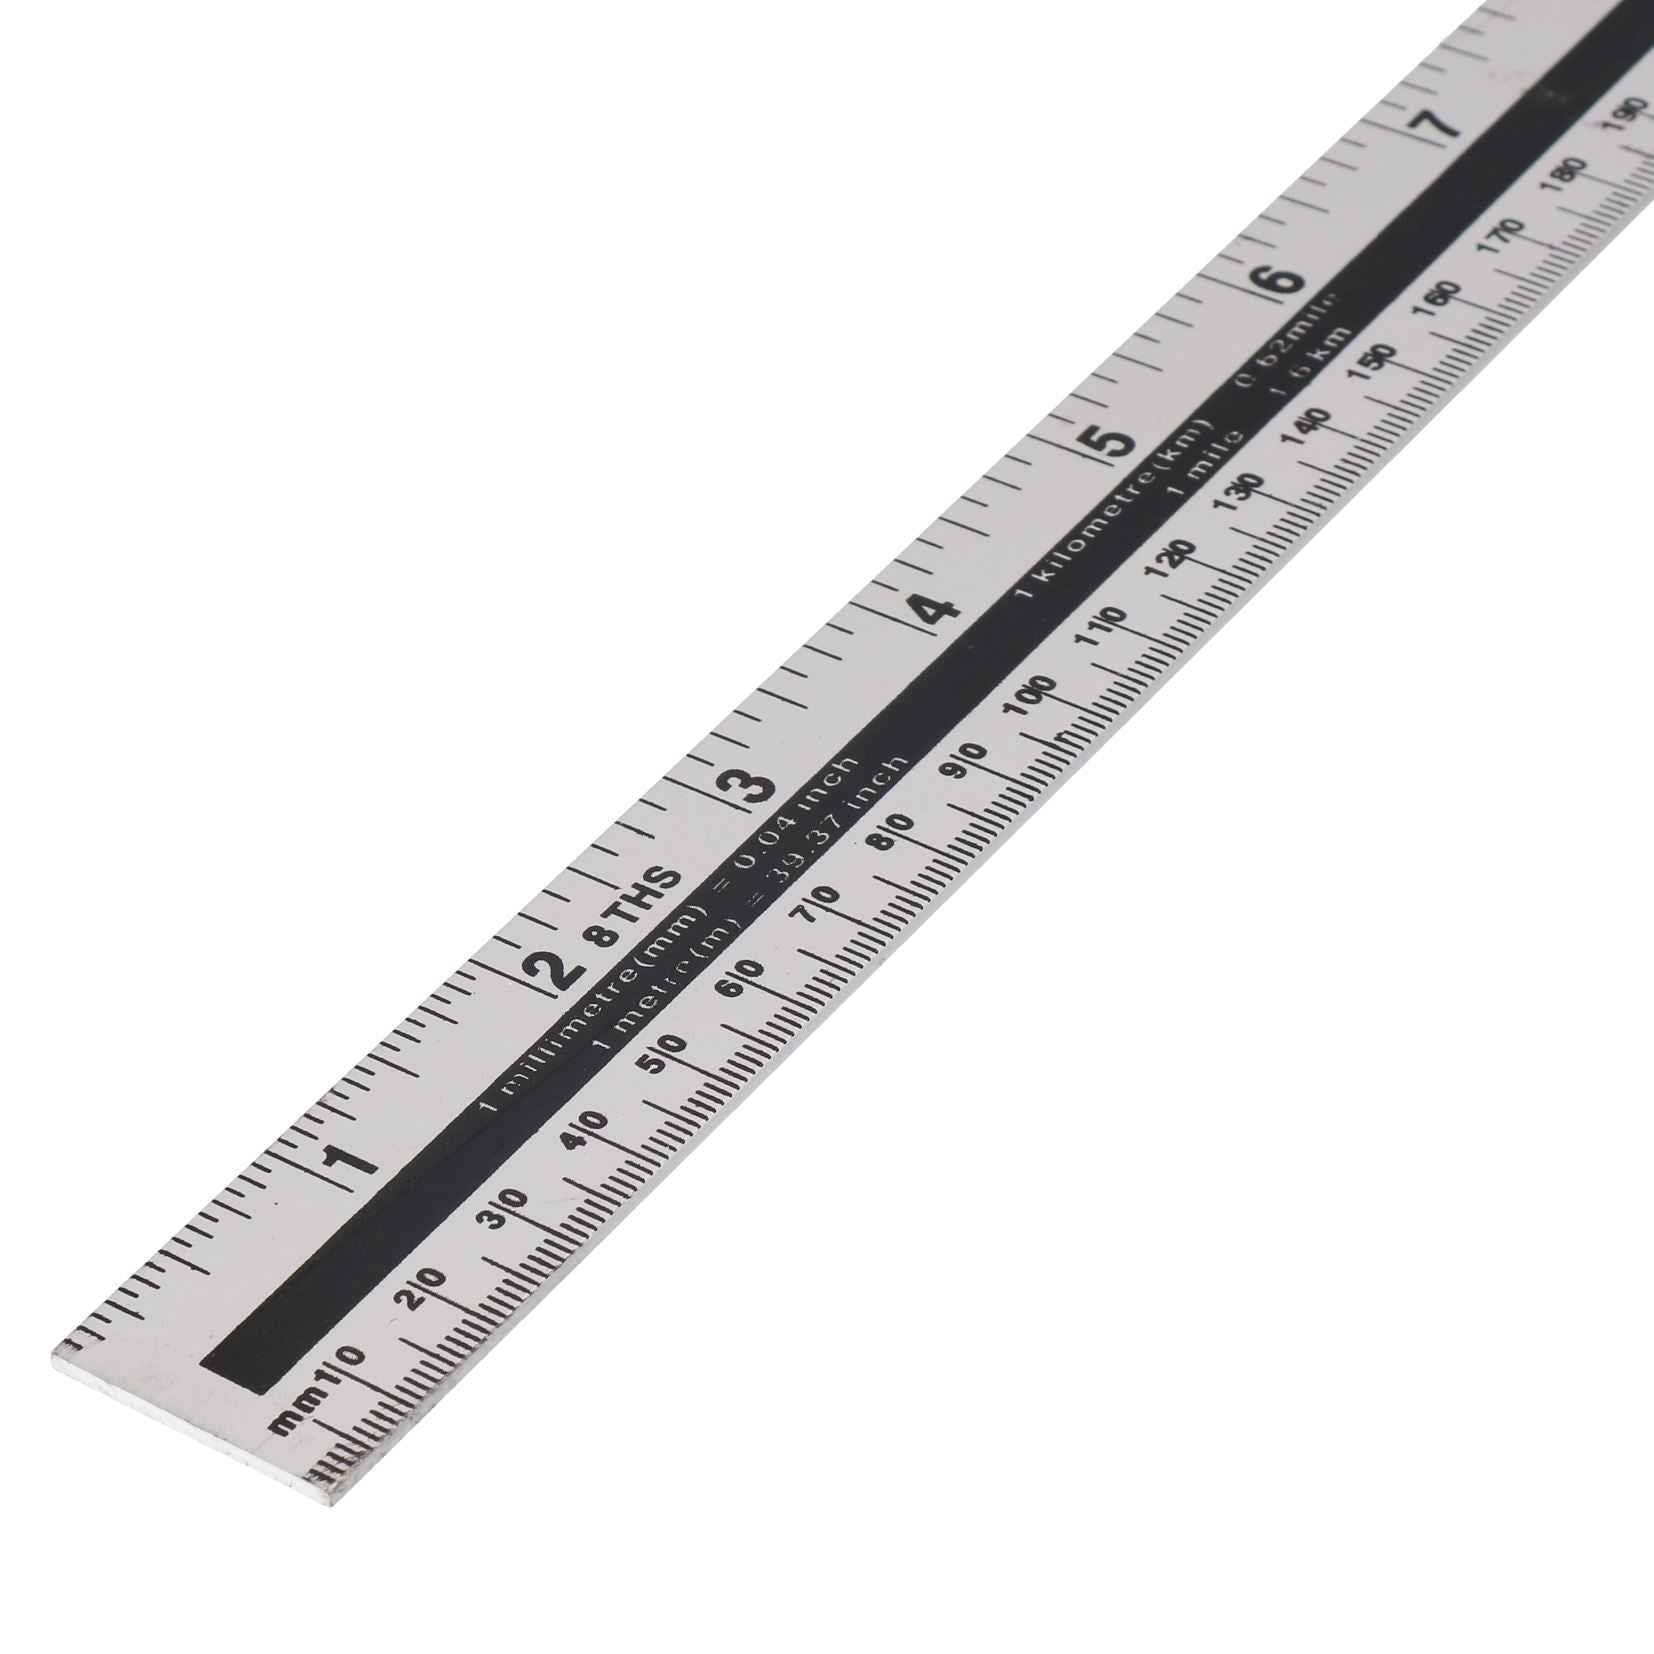 1m (40") Aluminium Ruler Imperial & Metric Conversion Table Straight Edge Rule